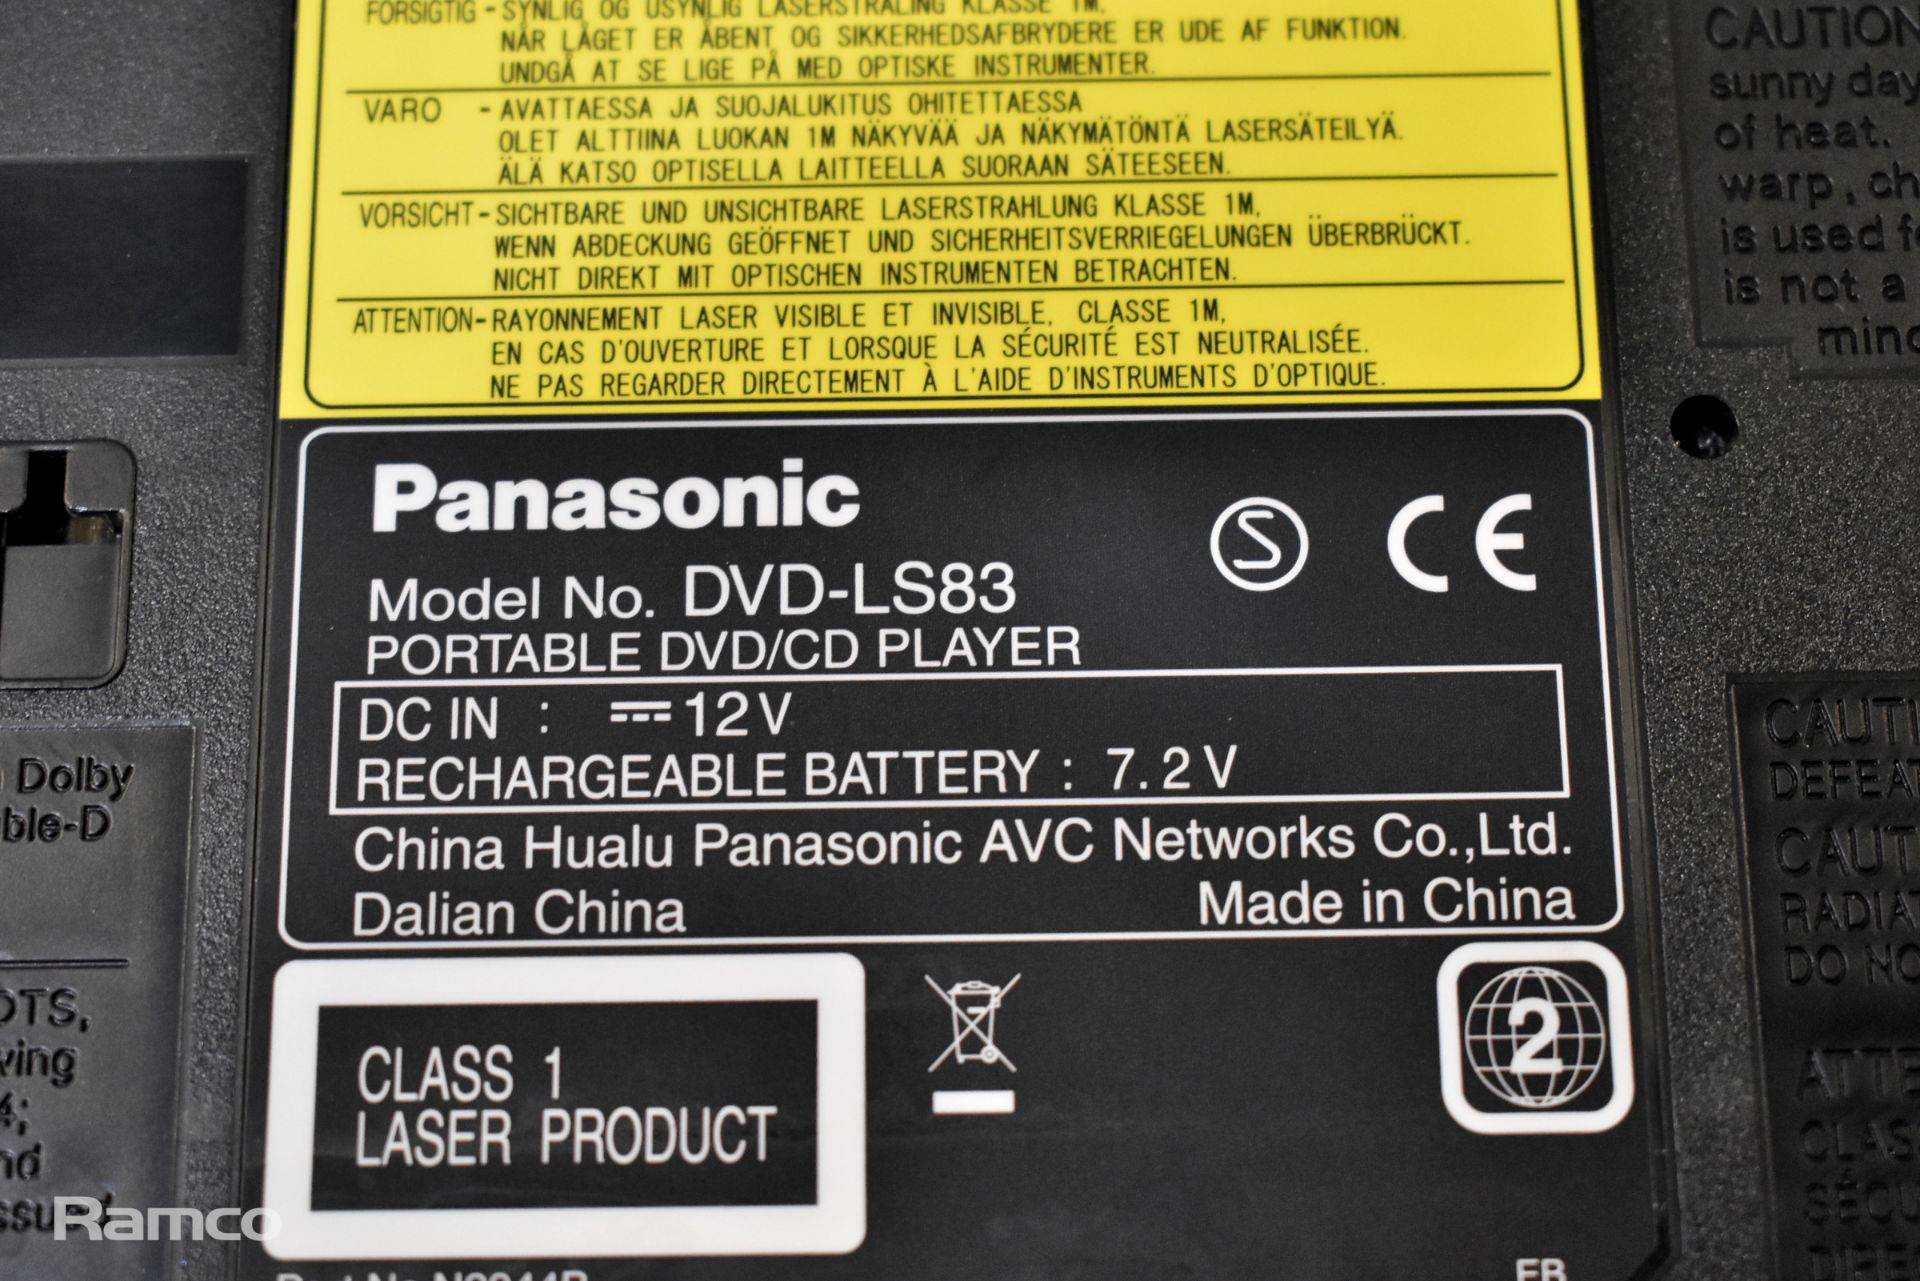 Panasonic DVD-LS83 portable DVD / CD player - Image 6 of 8